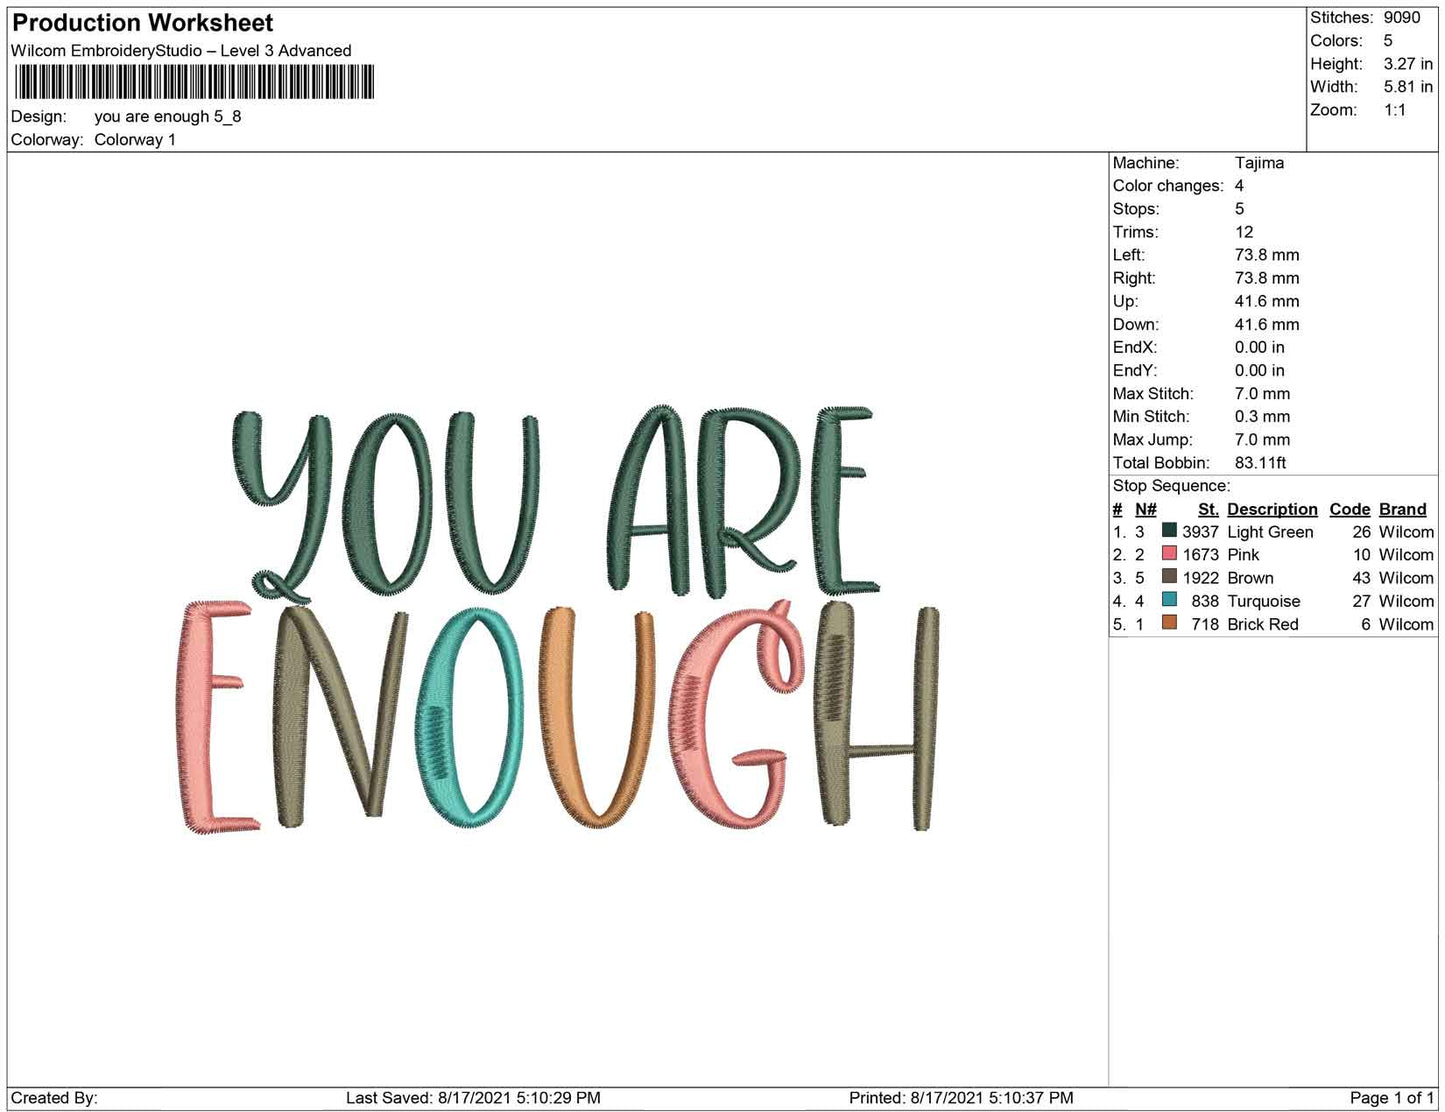 You are enough A